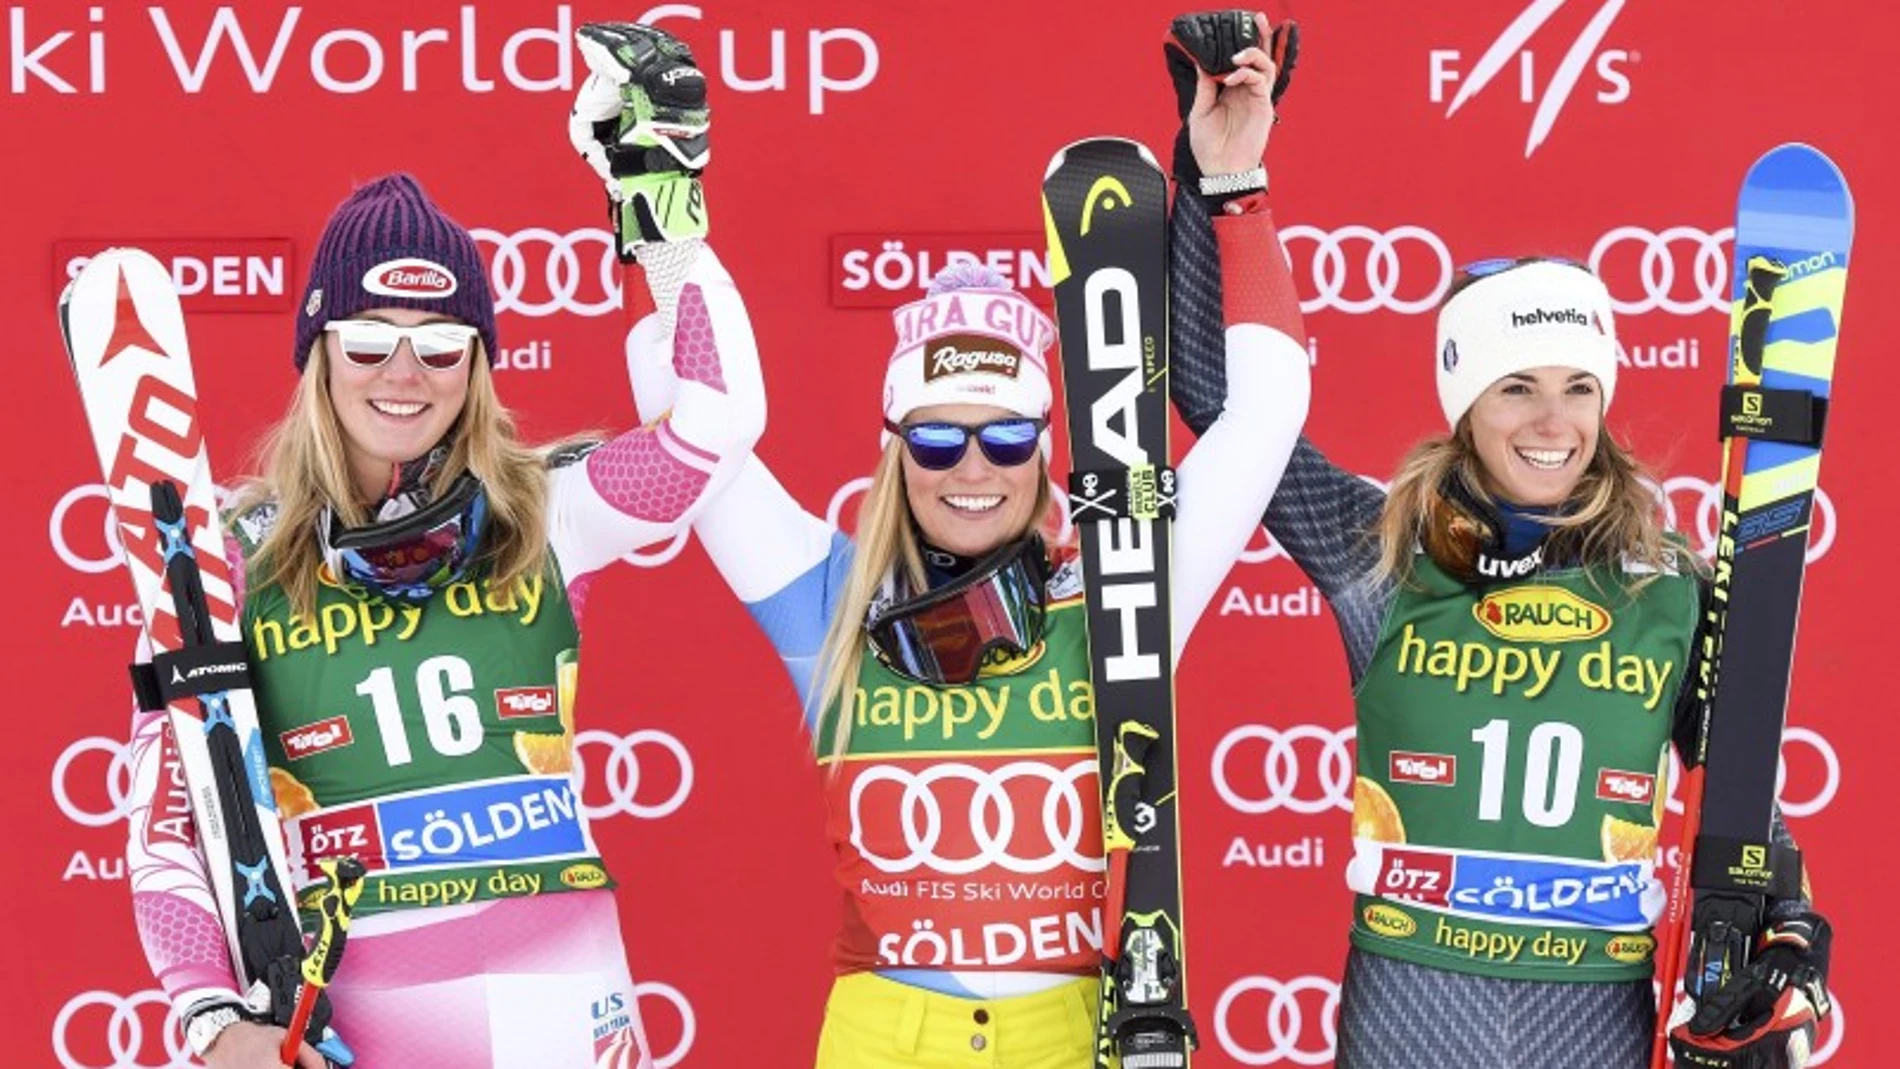 La suiza Lara Gut of Switzerland (centro, primera plaza), Mikaela Shiffrin de USA (izquierda, segunda plaza) y la italiana Marta Bassino (derecha, tercera plaza) en el podium de Solden